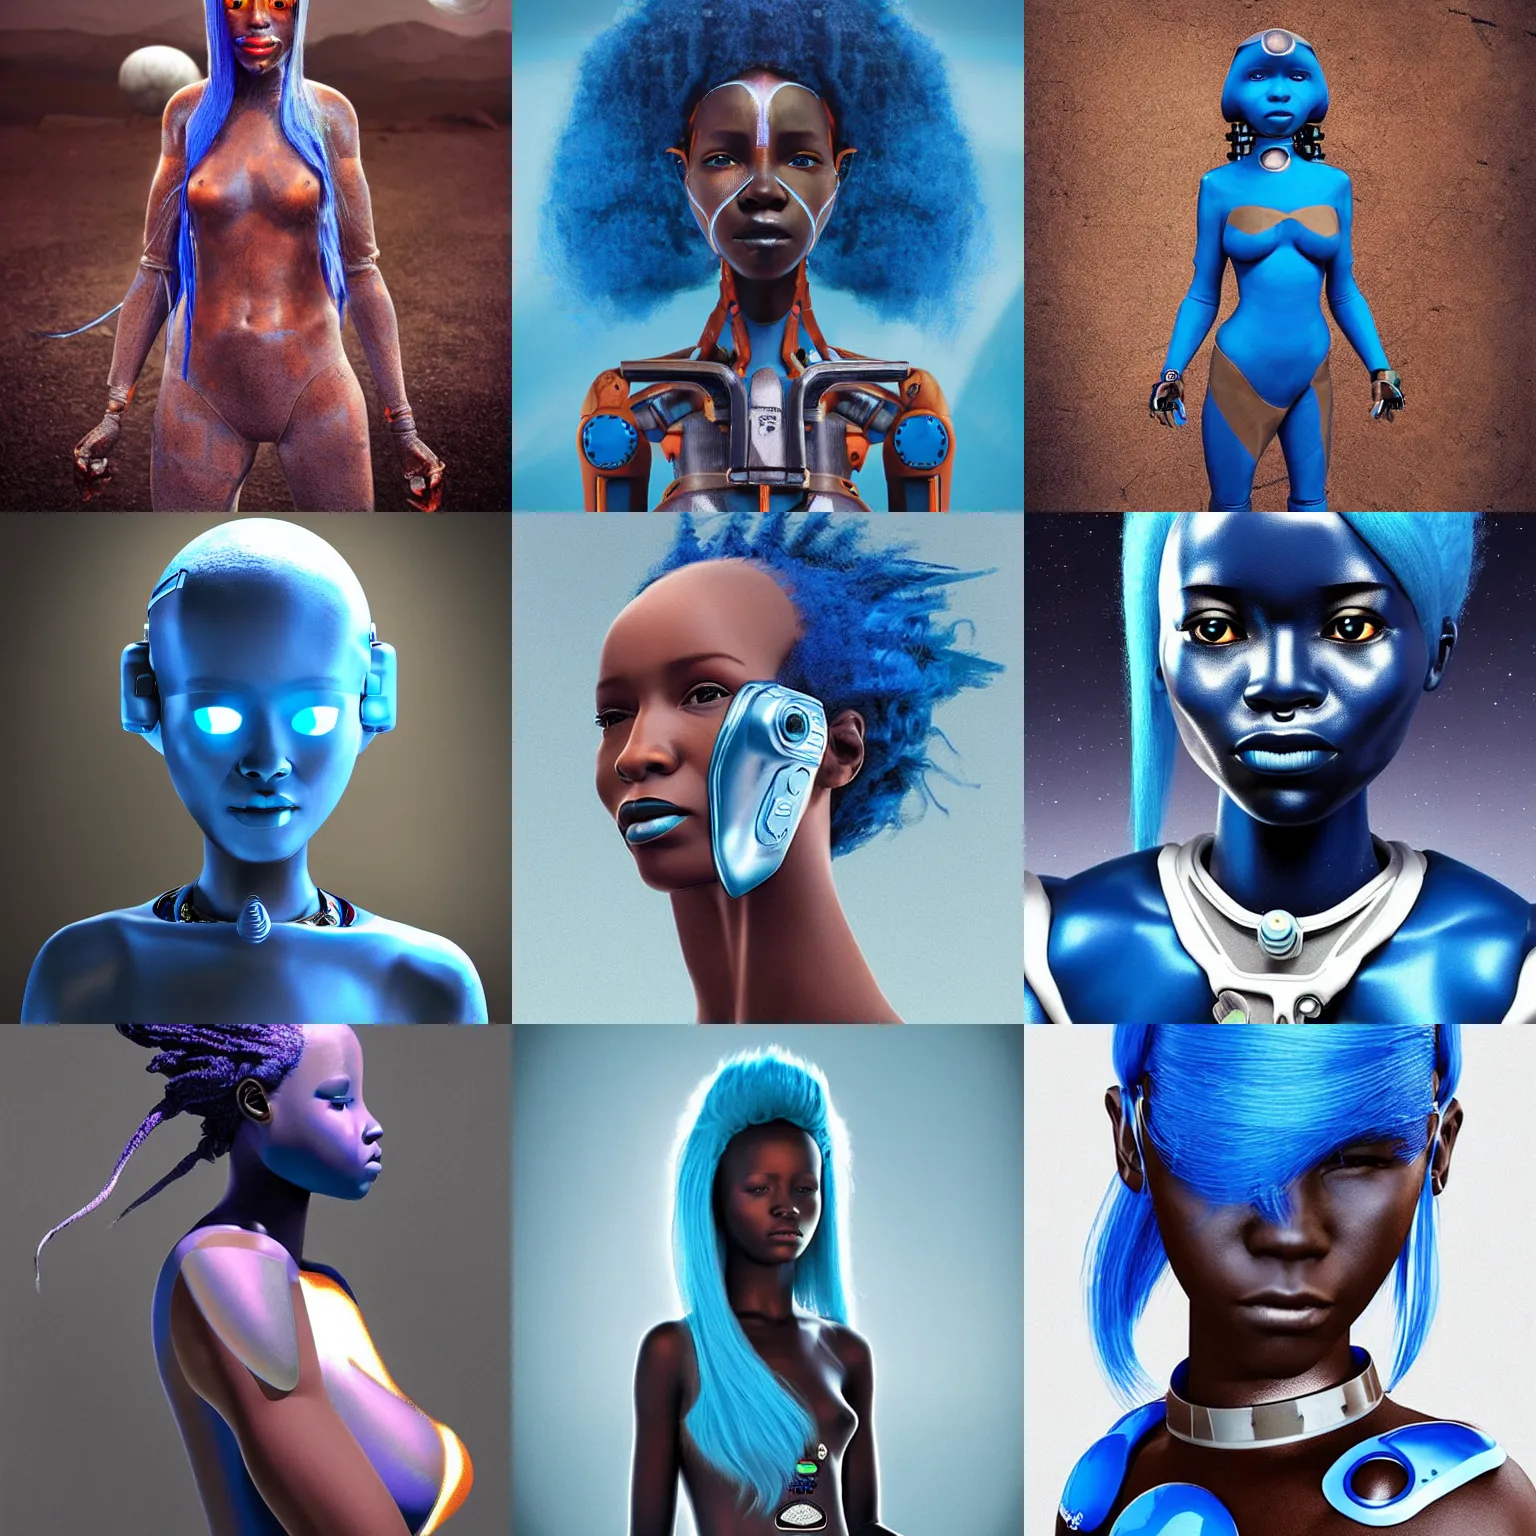 Prompt: beautiful futuristic himba astronaut woman, robotic arms, blue hair, weightless, hyperrealistic, scifi, concept art, photograph